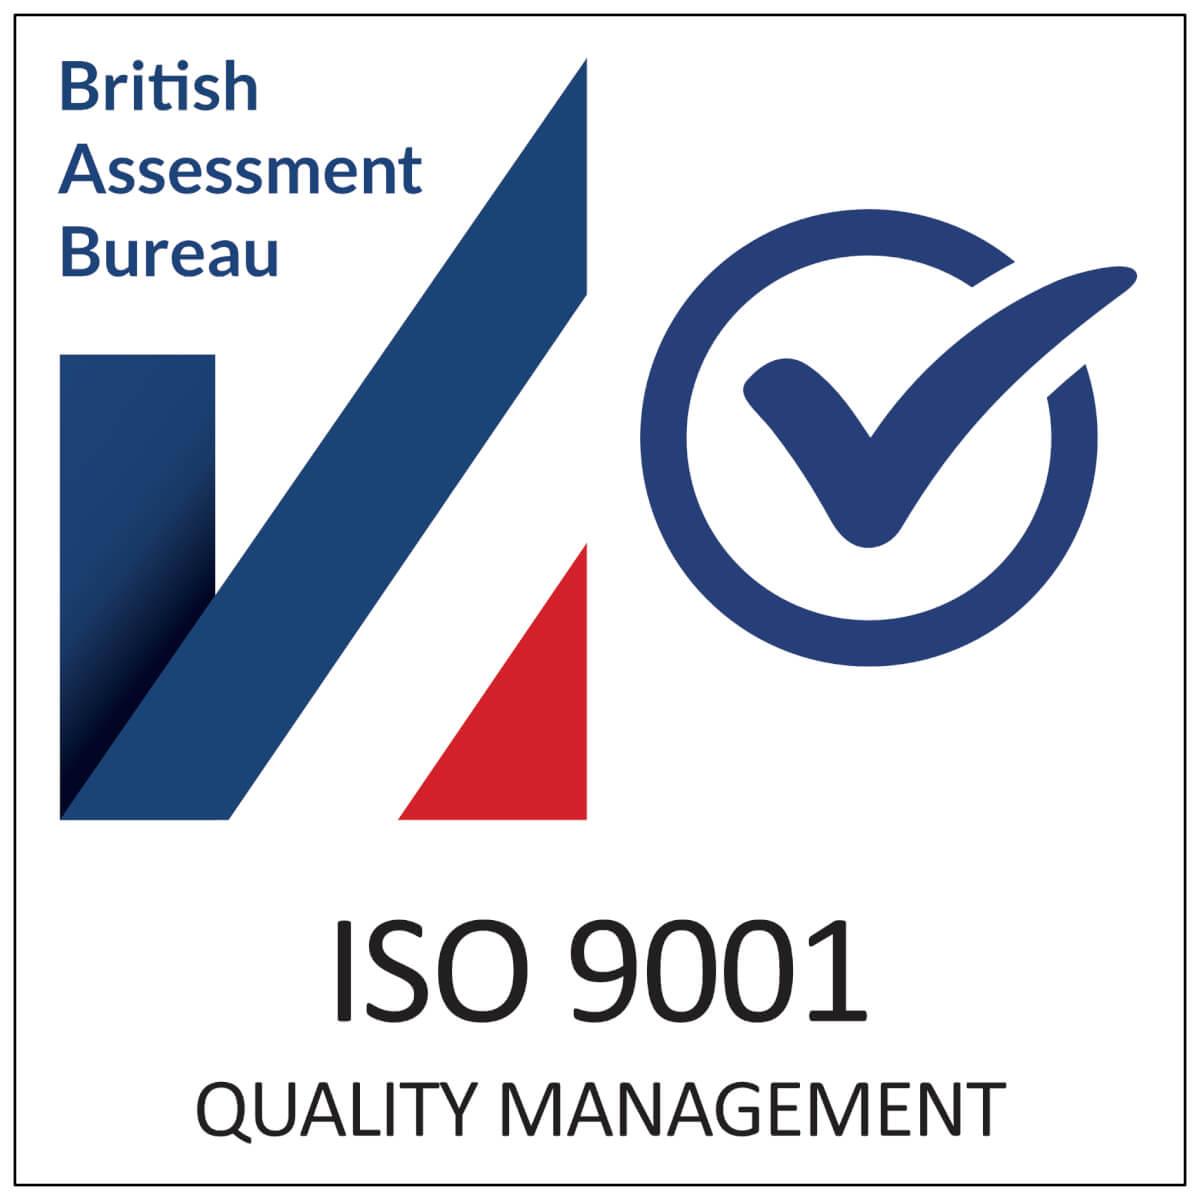 ISO 9001 Logo - Certification Badges | British ...